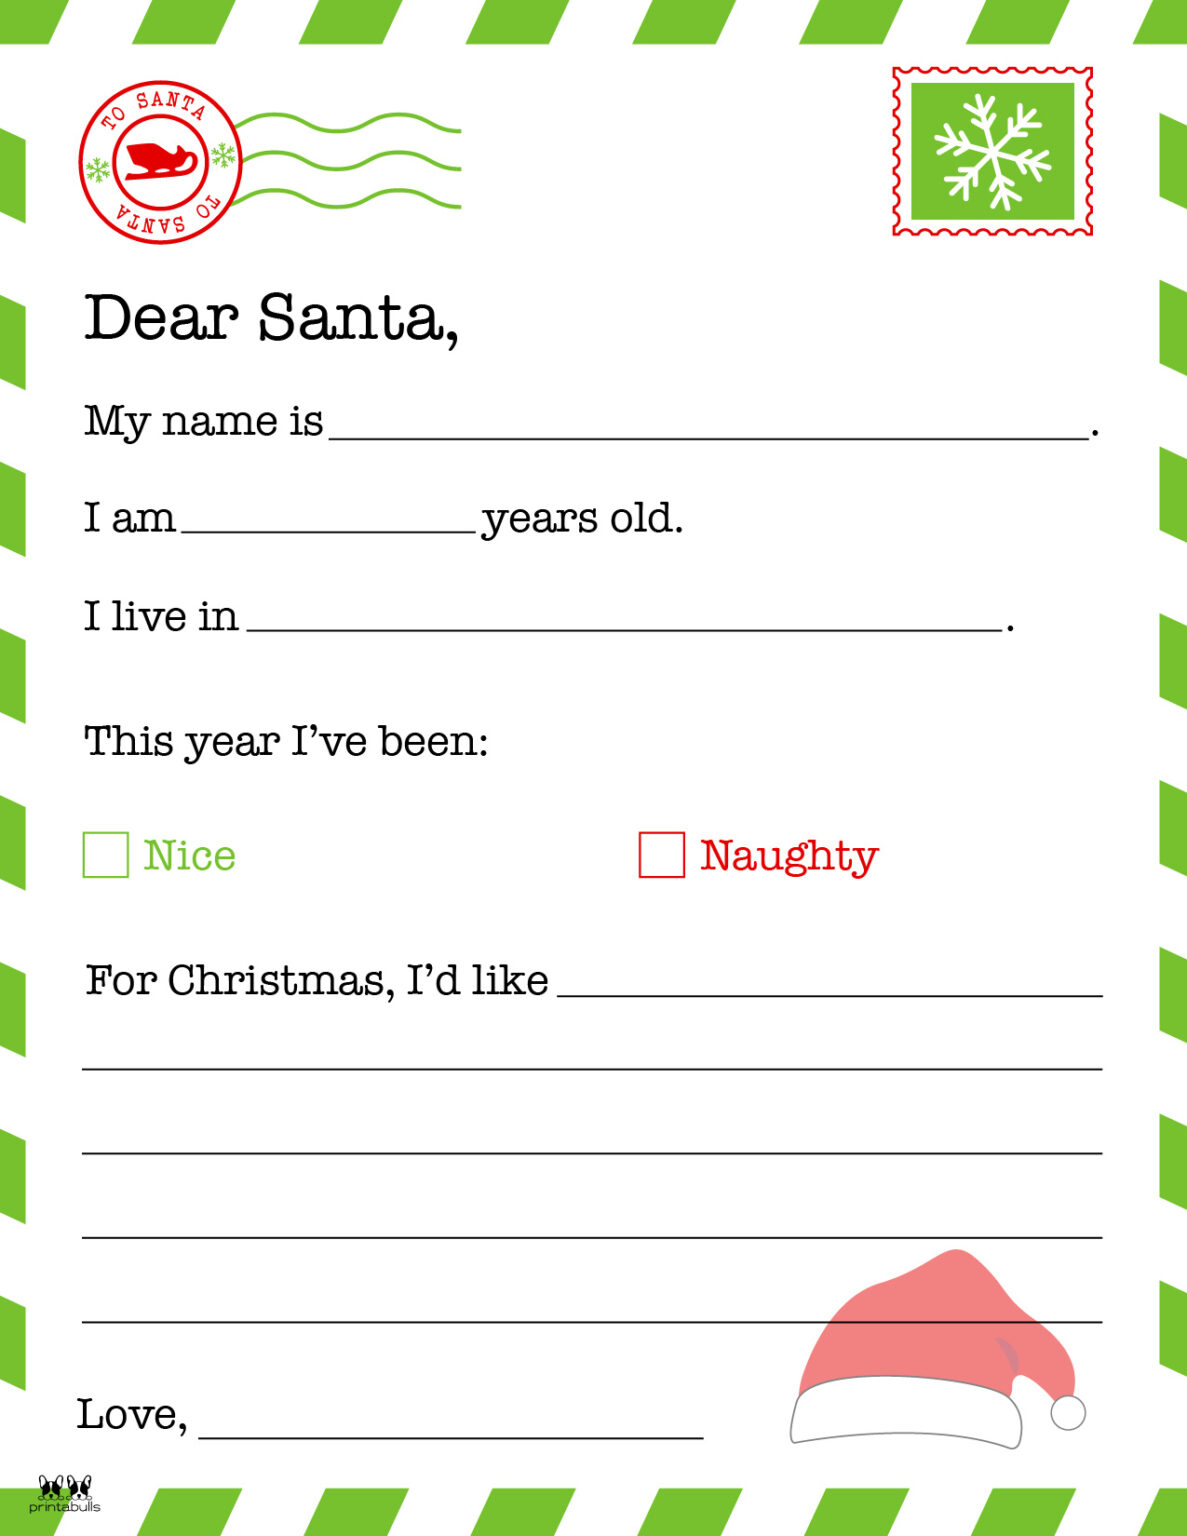 dear-santa-letter-dear-santa-letter-christmas-school-free-printable